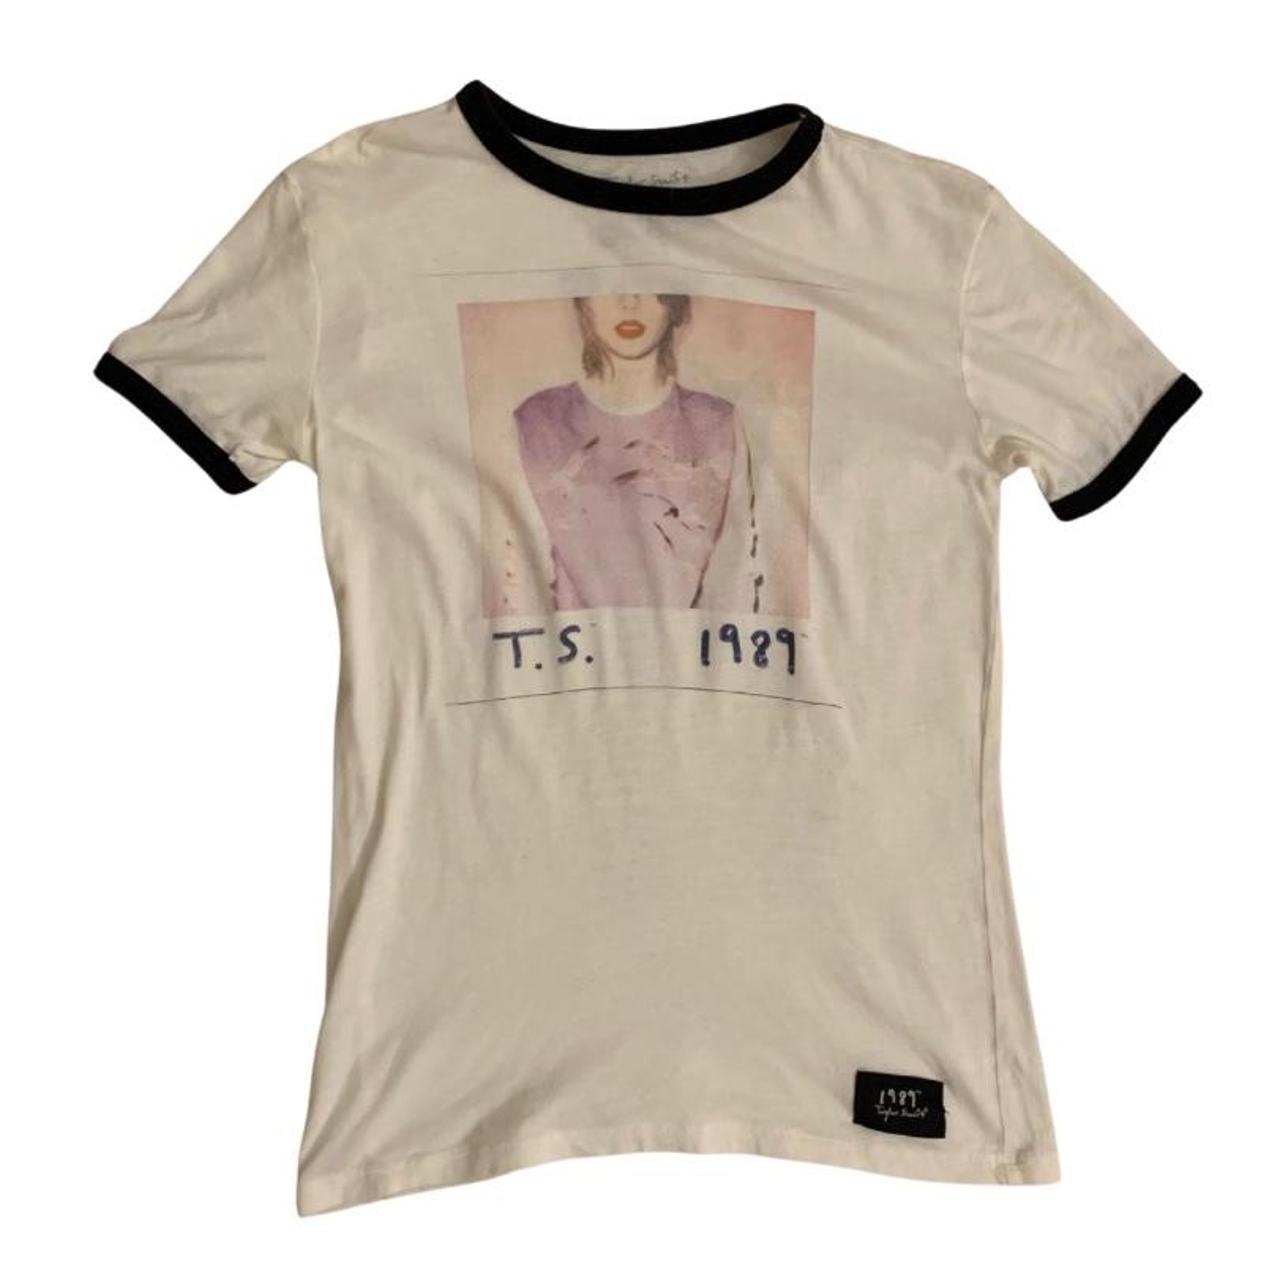 RARE taylor swift 1989 world tour shirt. size xs - Depop